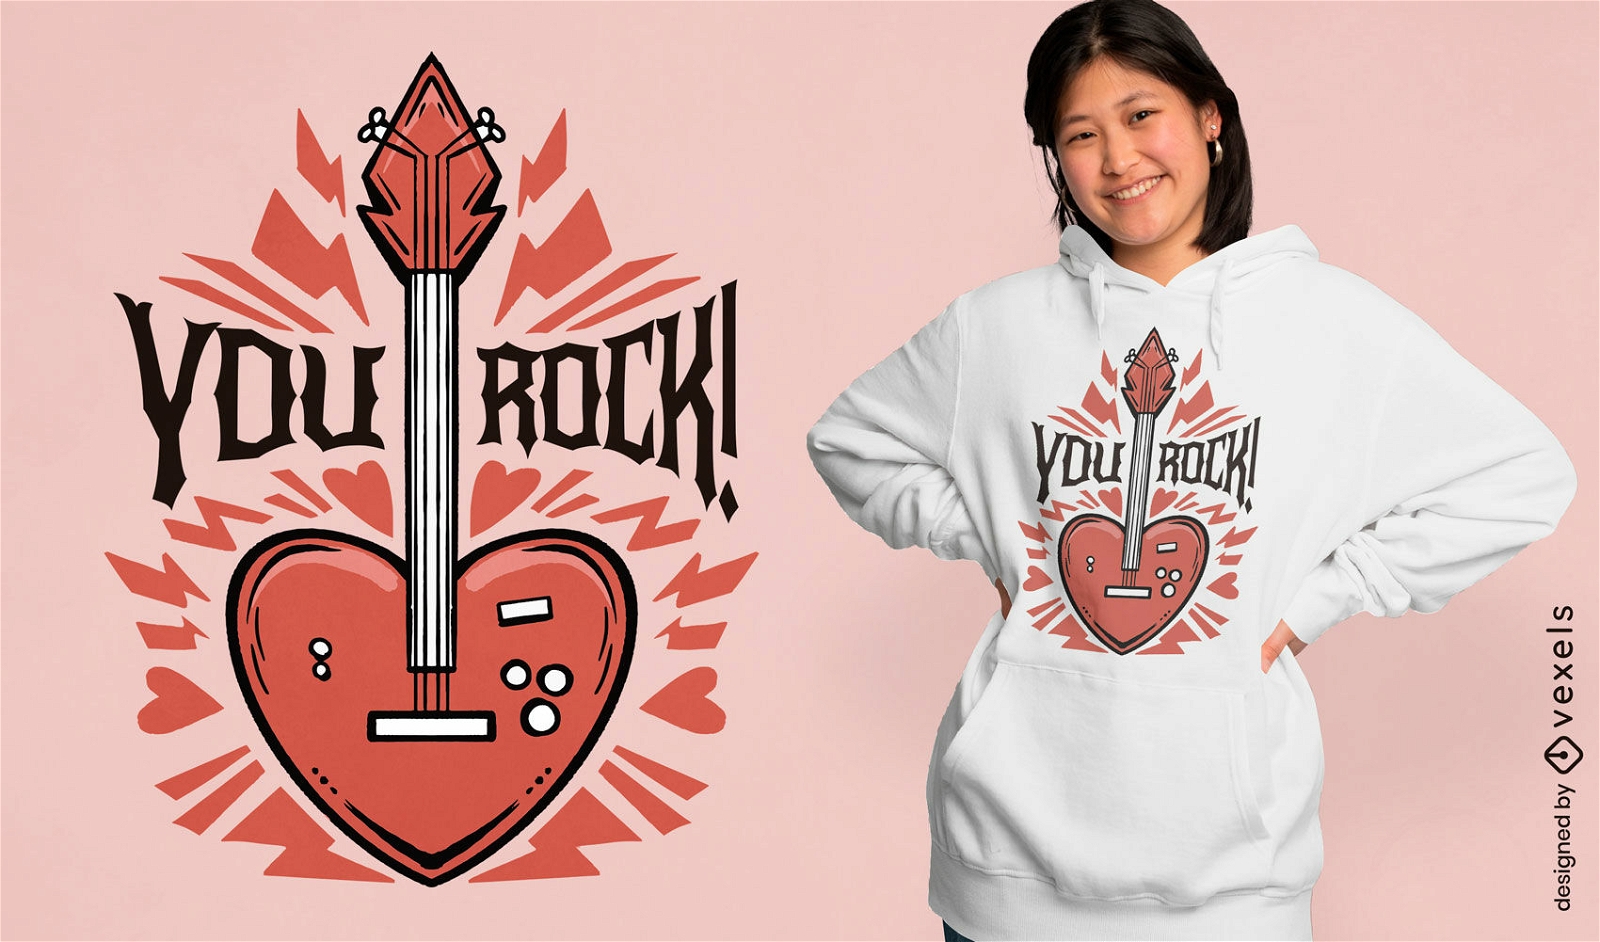 Rock- und Romantikgitarren-T-Shirt-Design